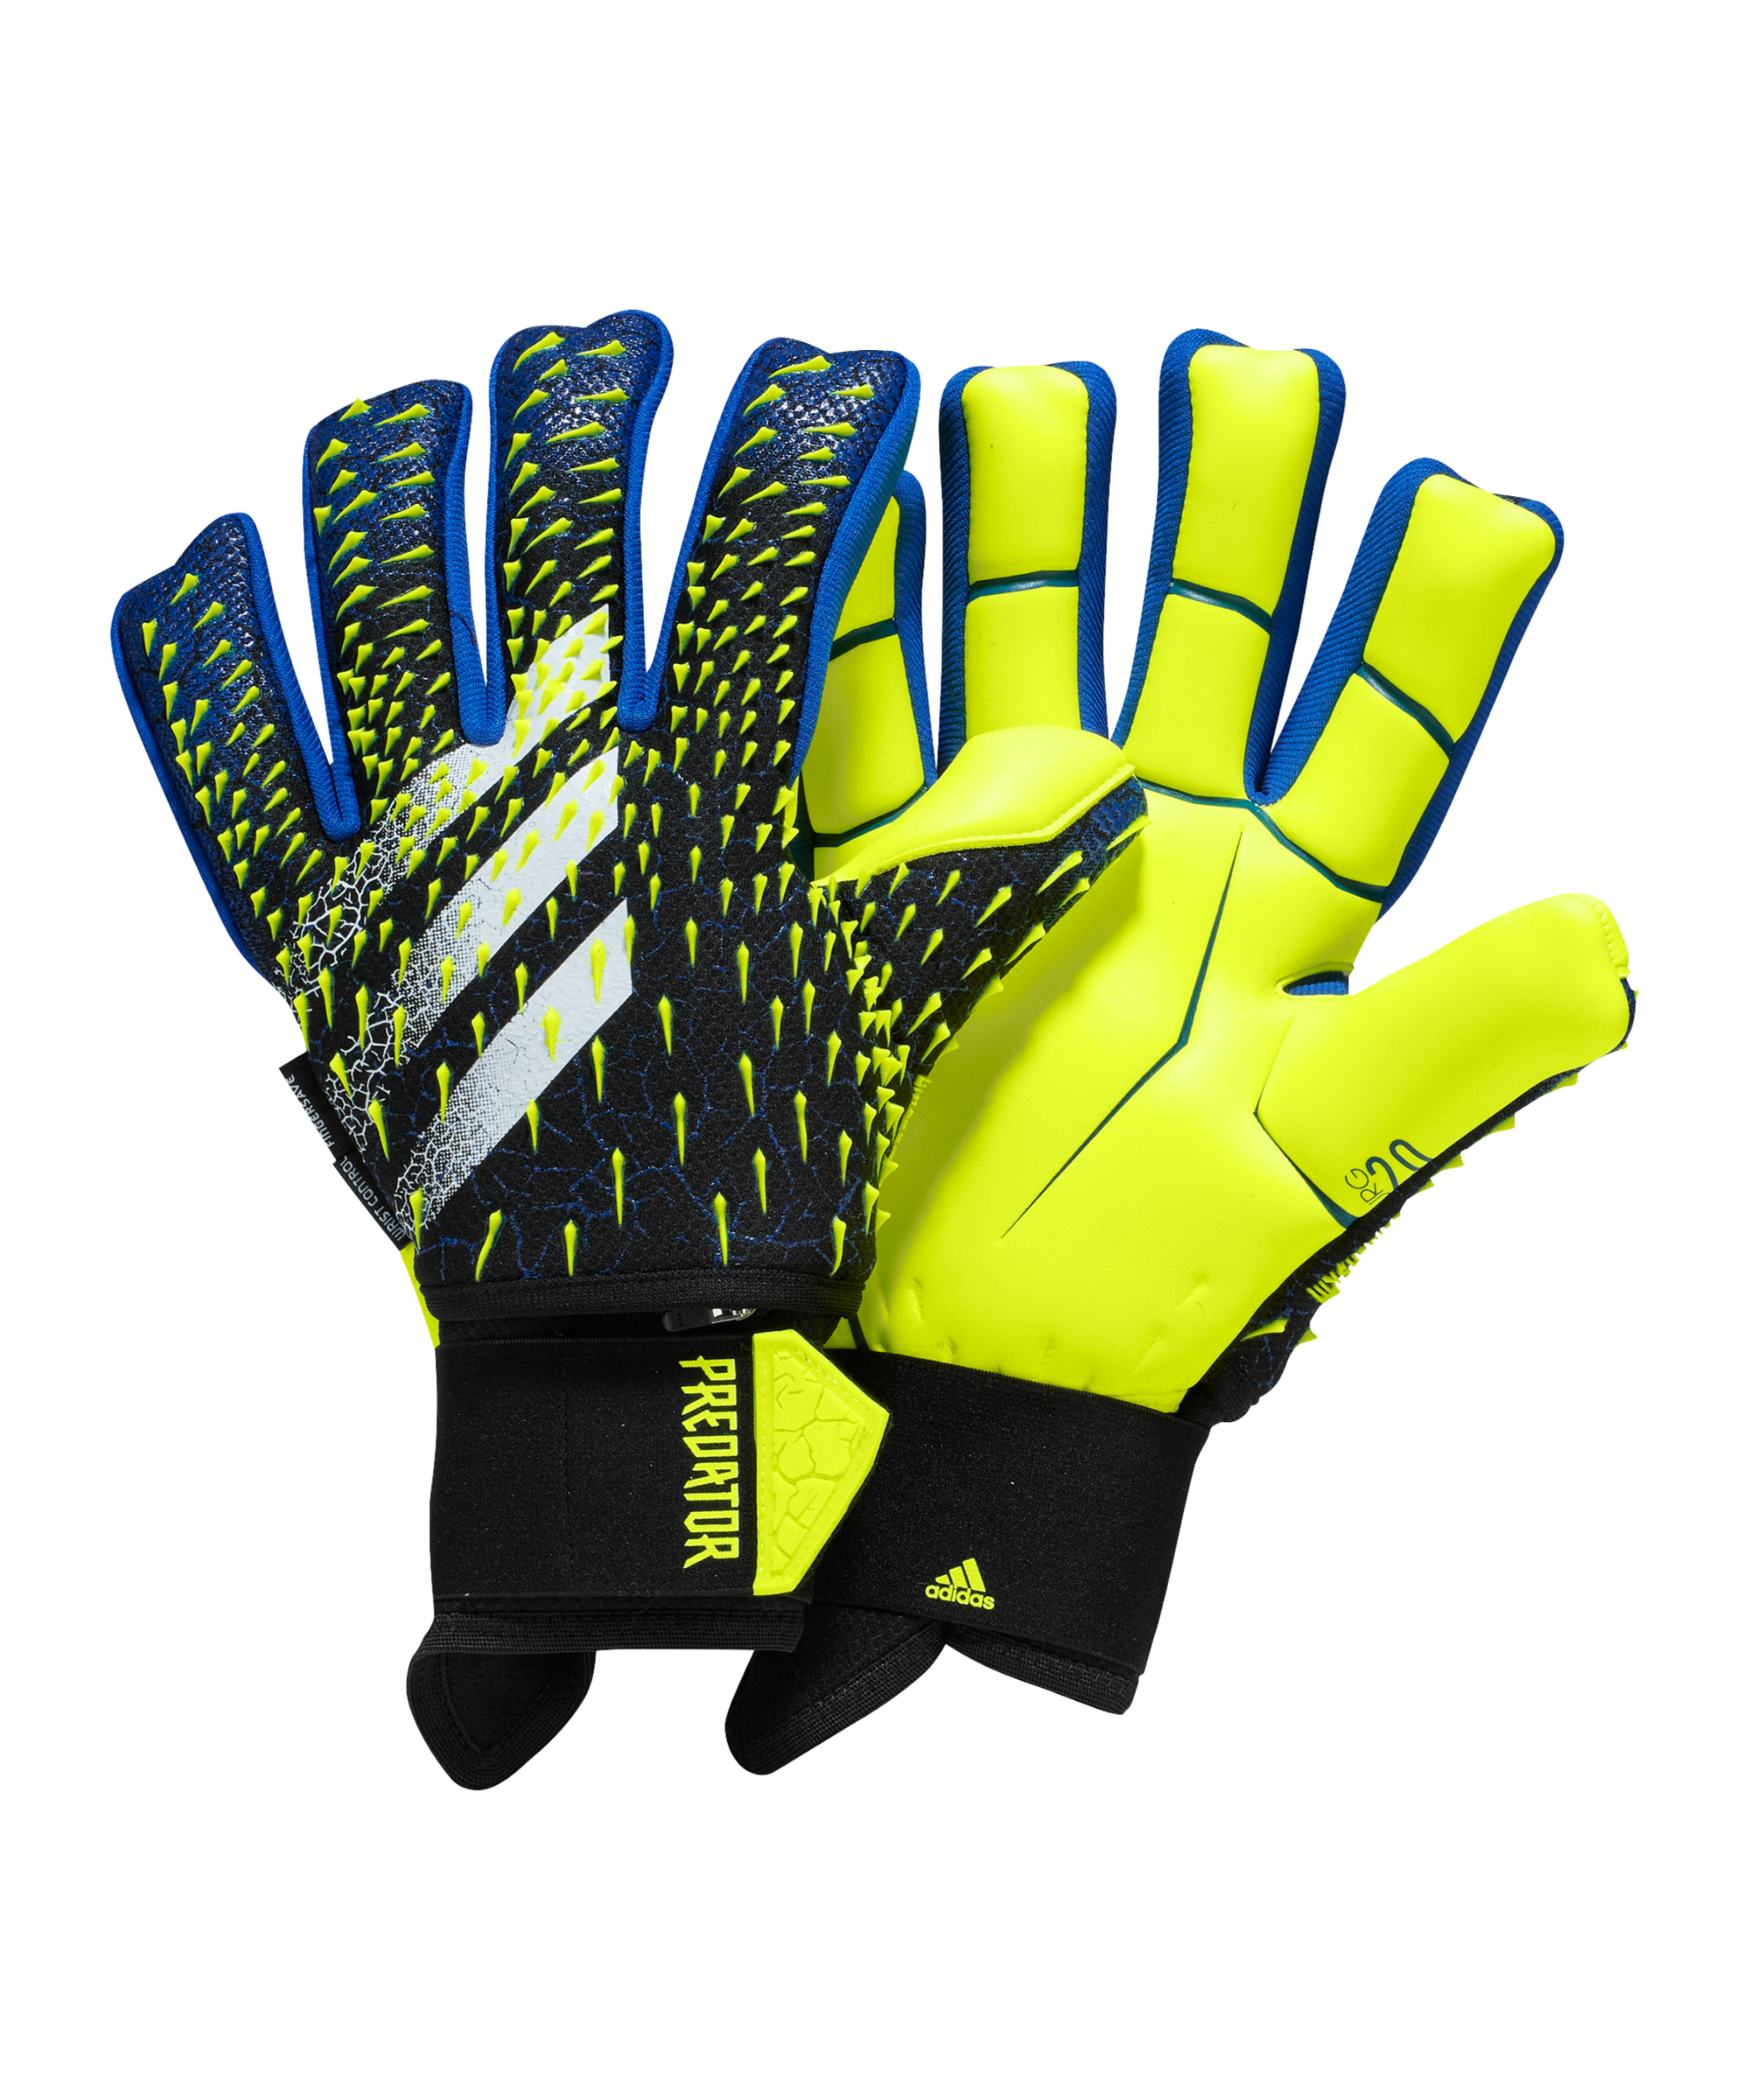 Адидас предатор перчатки. Adidas Predator Pro goalkeeper Gloves 2020. Перчатки адидас предатор. Adidas Predator 20 Pro. Вратарские перчатки адидас предатор.